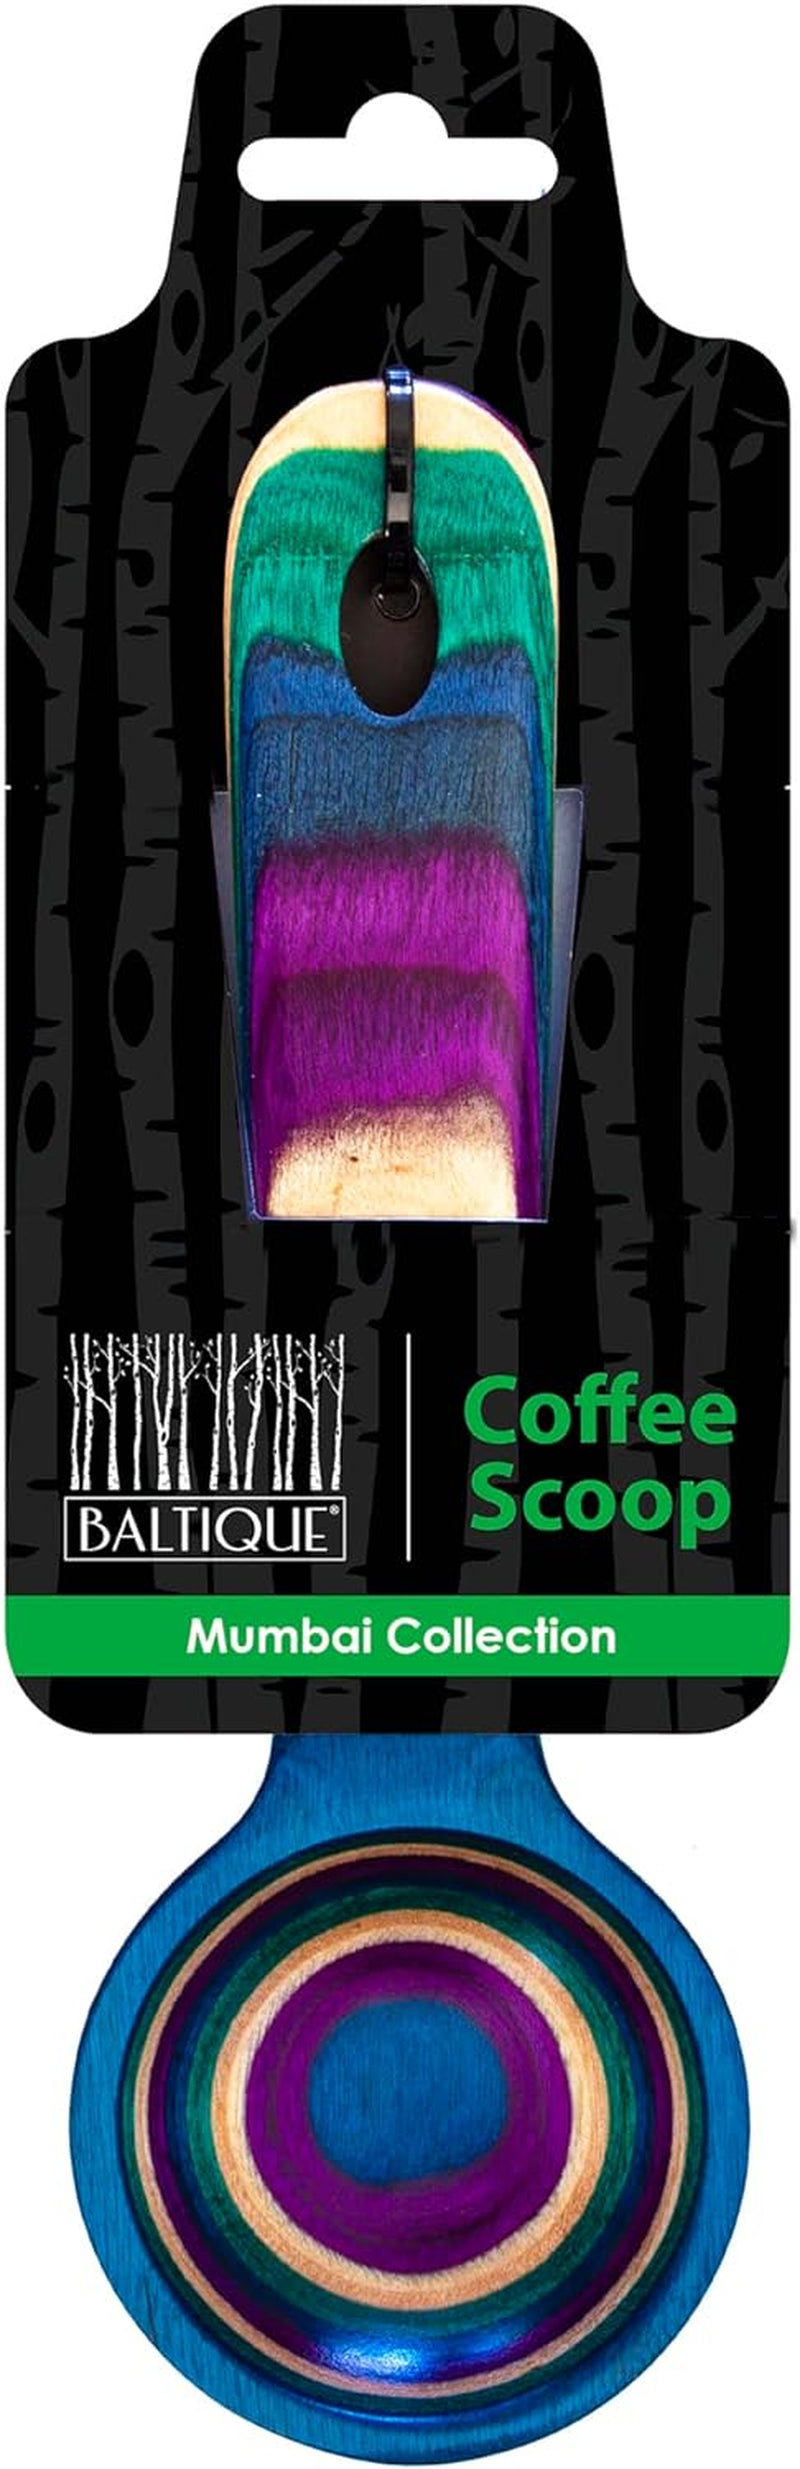 Baltique Mumbai Collection Wooden Coffee Scoop